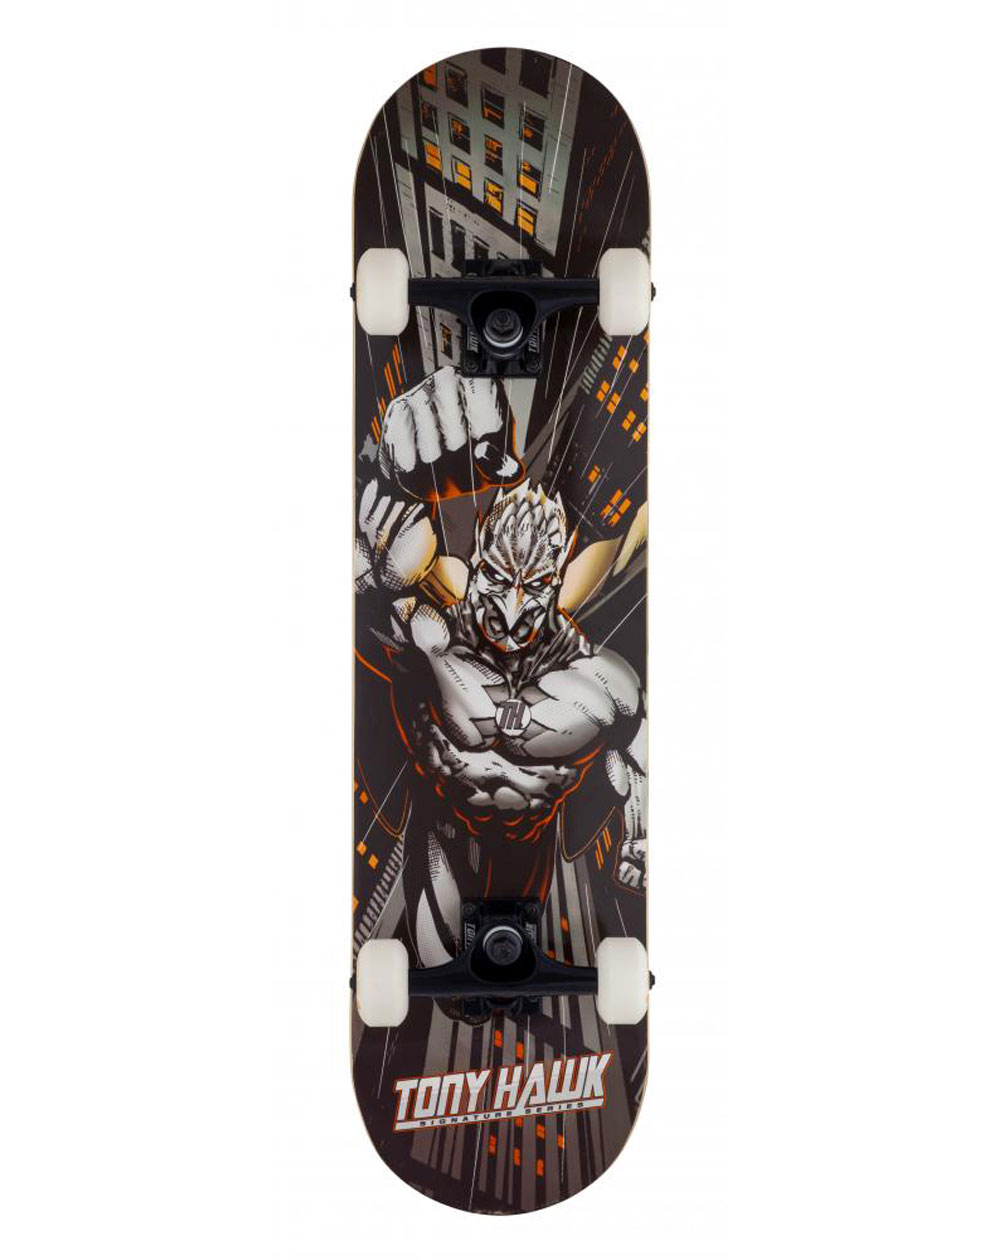 Tony Hawk Skateboard Complète Skyscaper 7.75" Orange